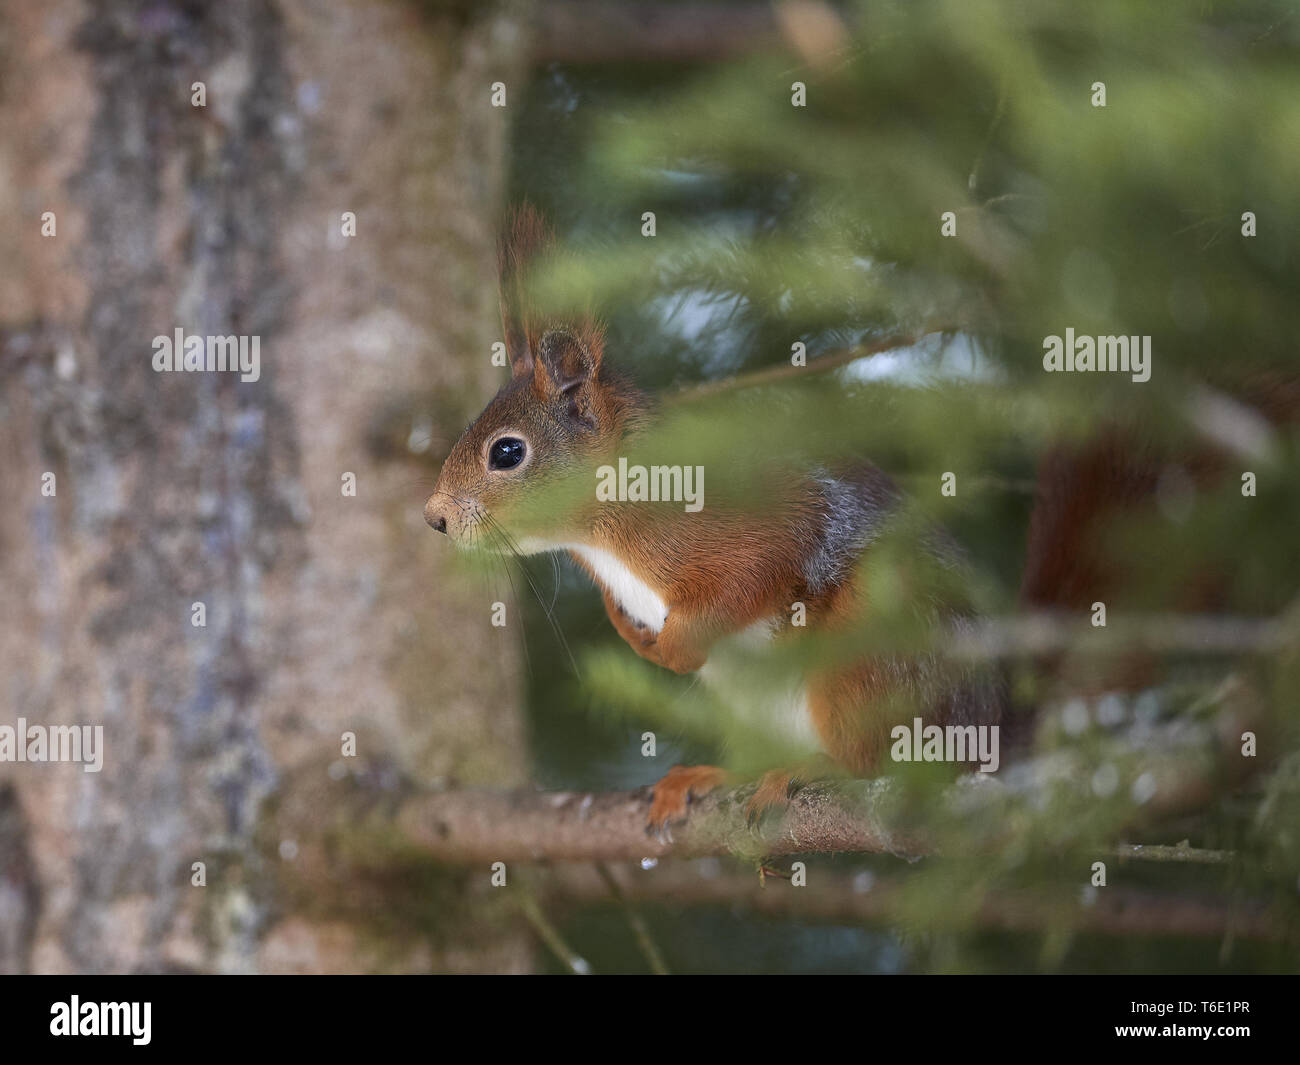 Eurasian red squirrel Stock Photo